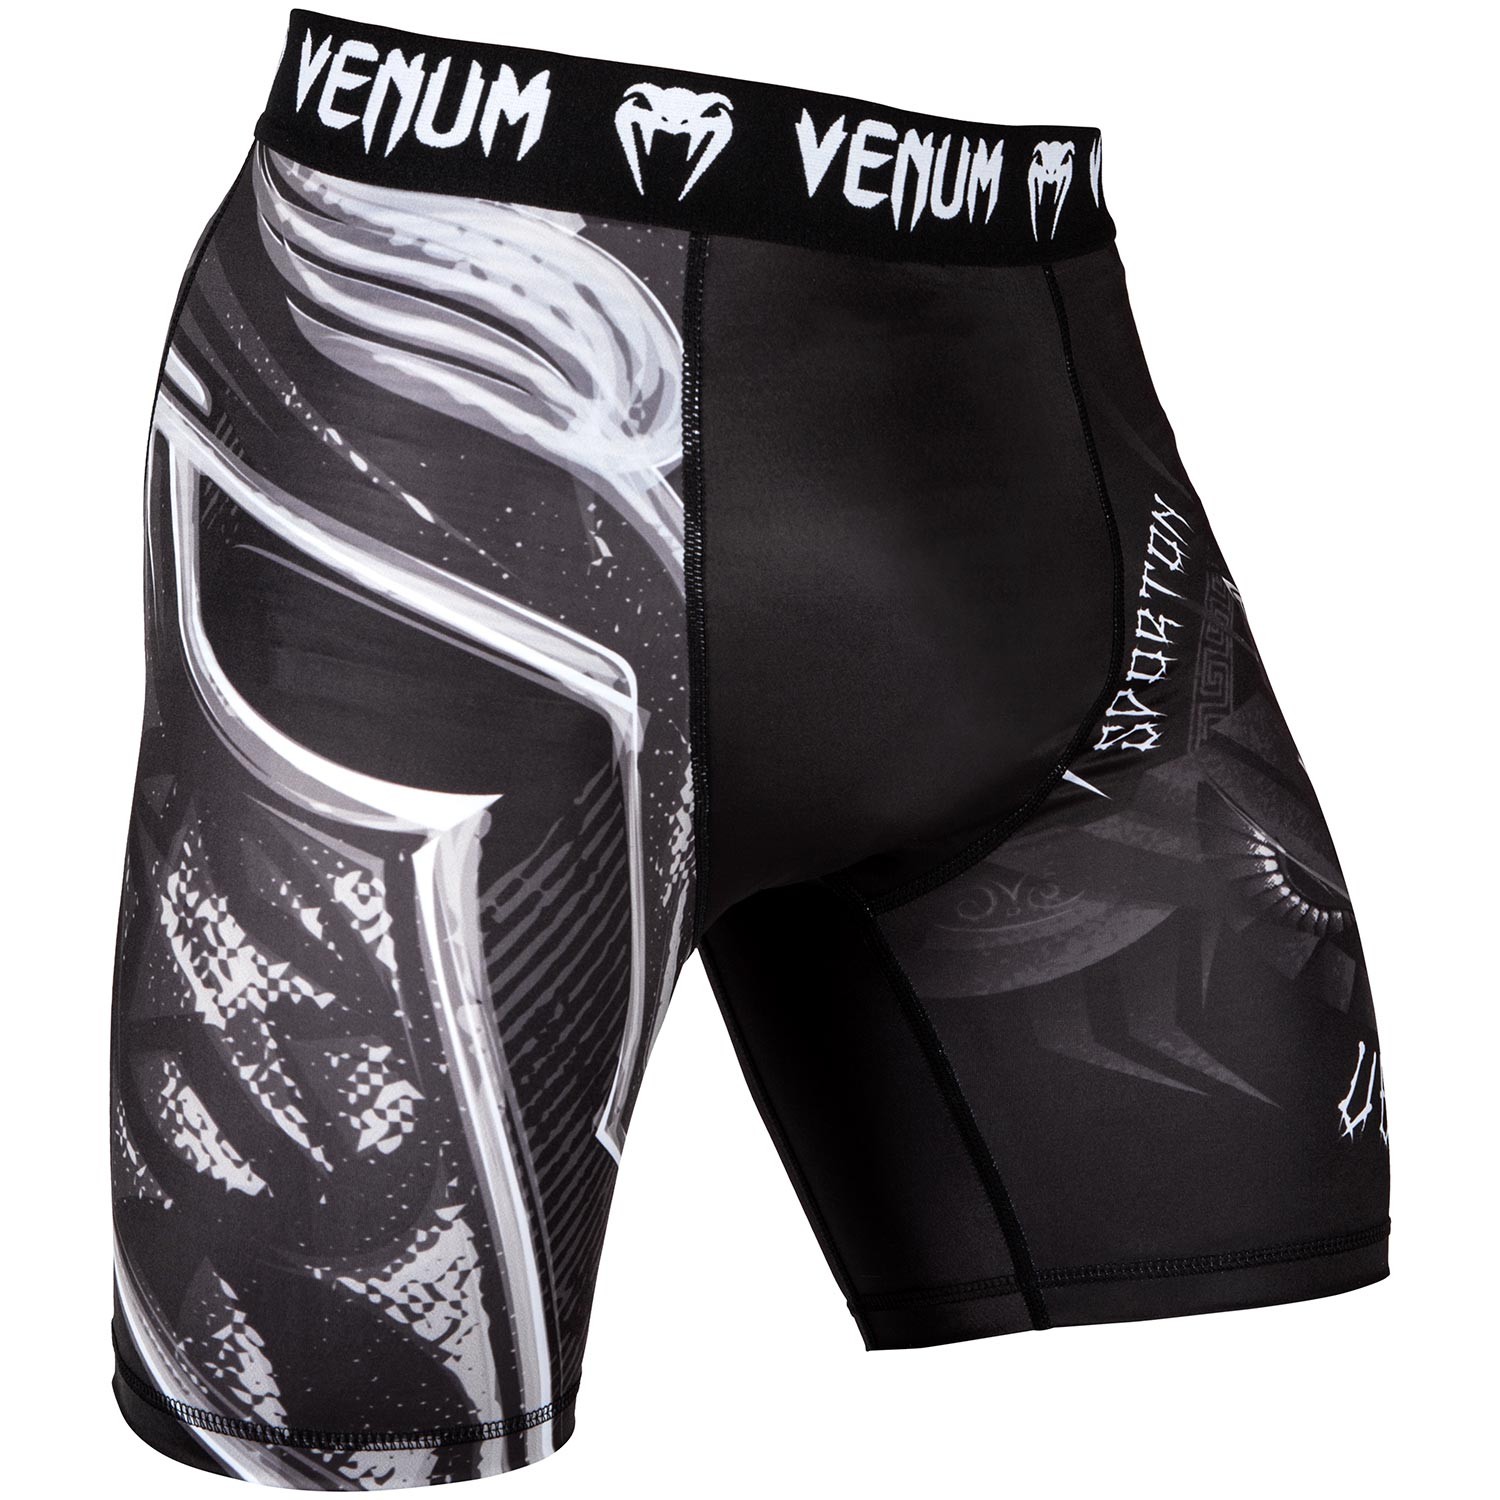 Venum Gladiator 3.0 Vale Tudo Compression Shorts